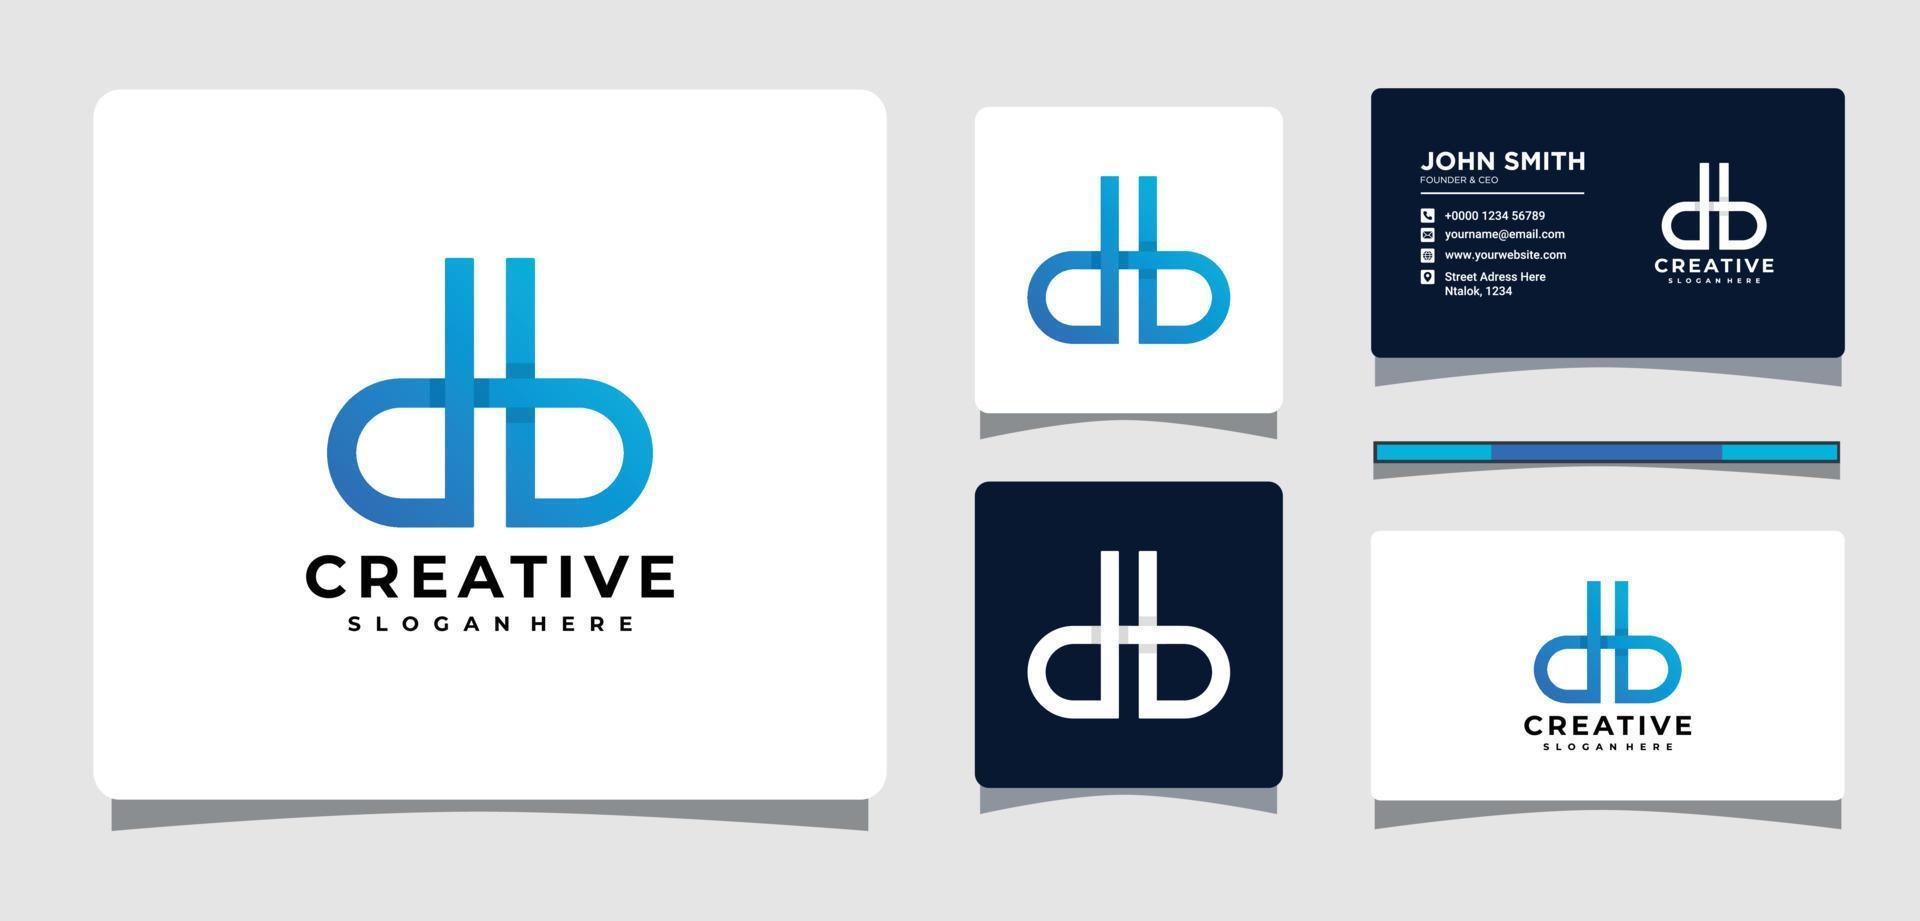 Anfangsbuchstabe db-Logo-Vorlage mit Visitenkarten-Design-Inspiration vektor